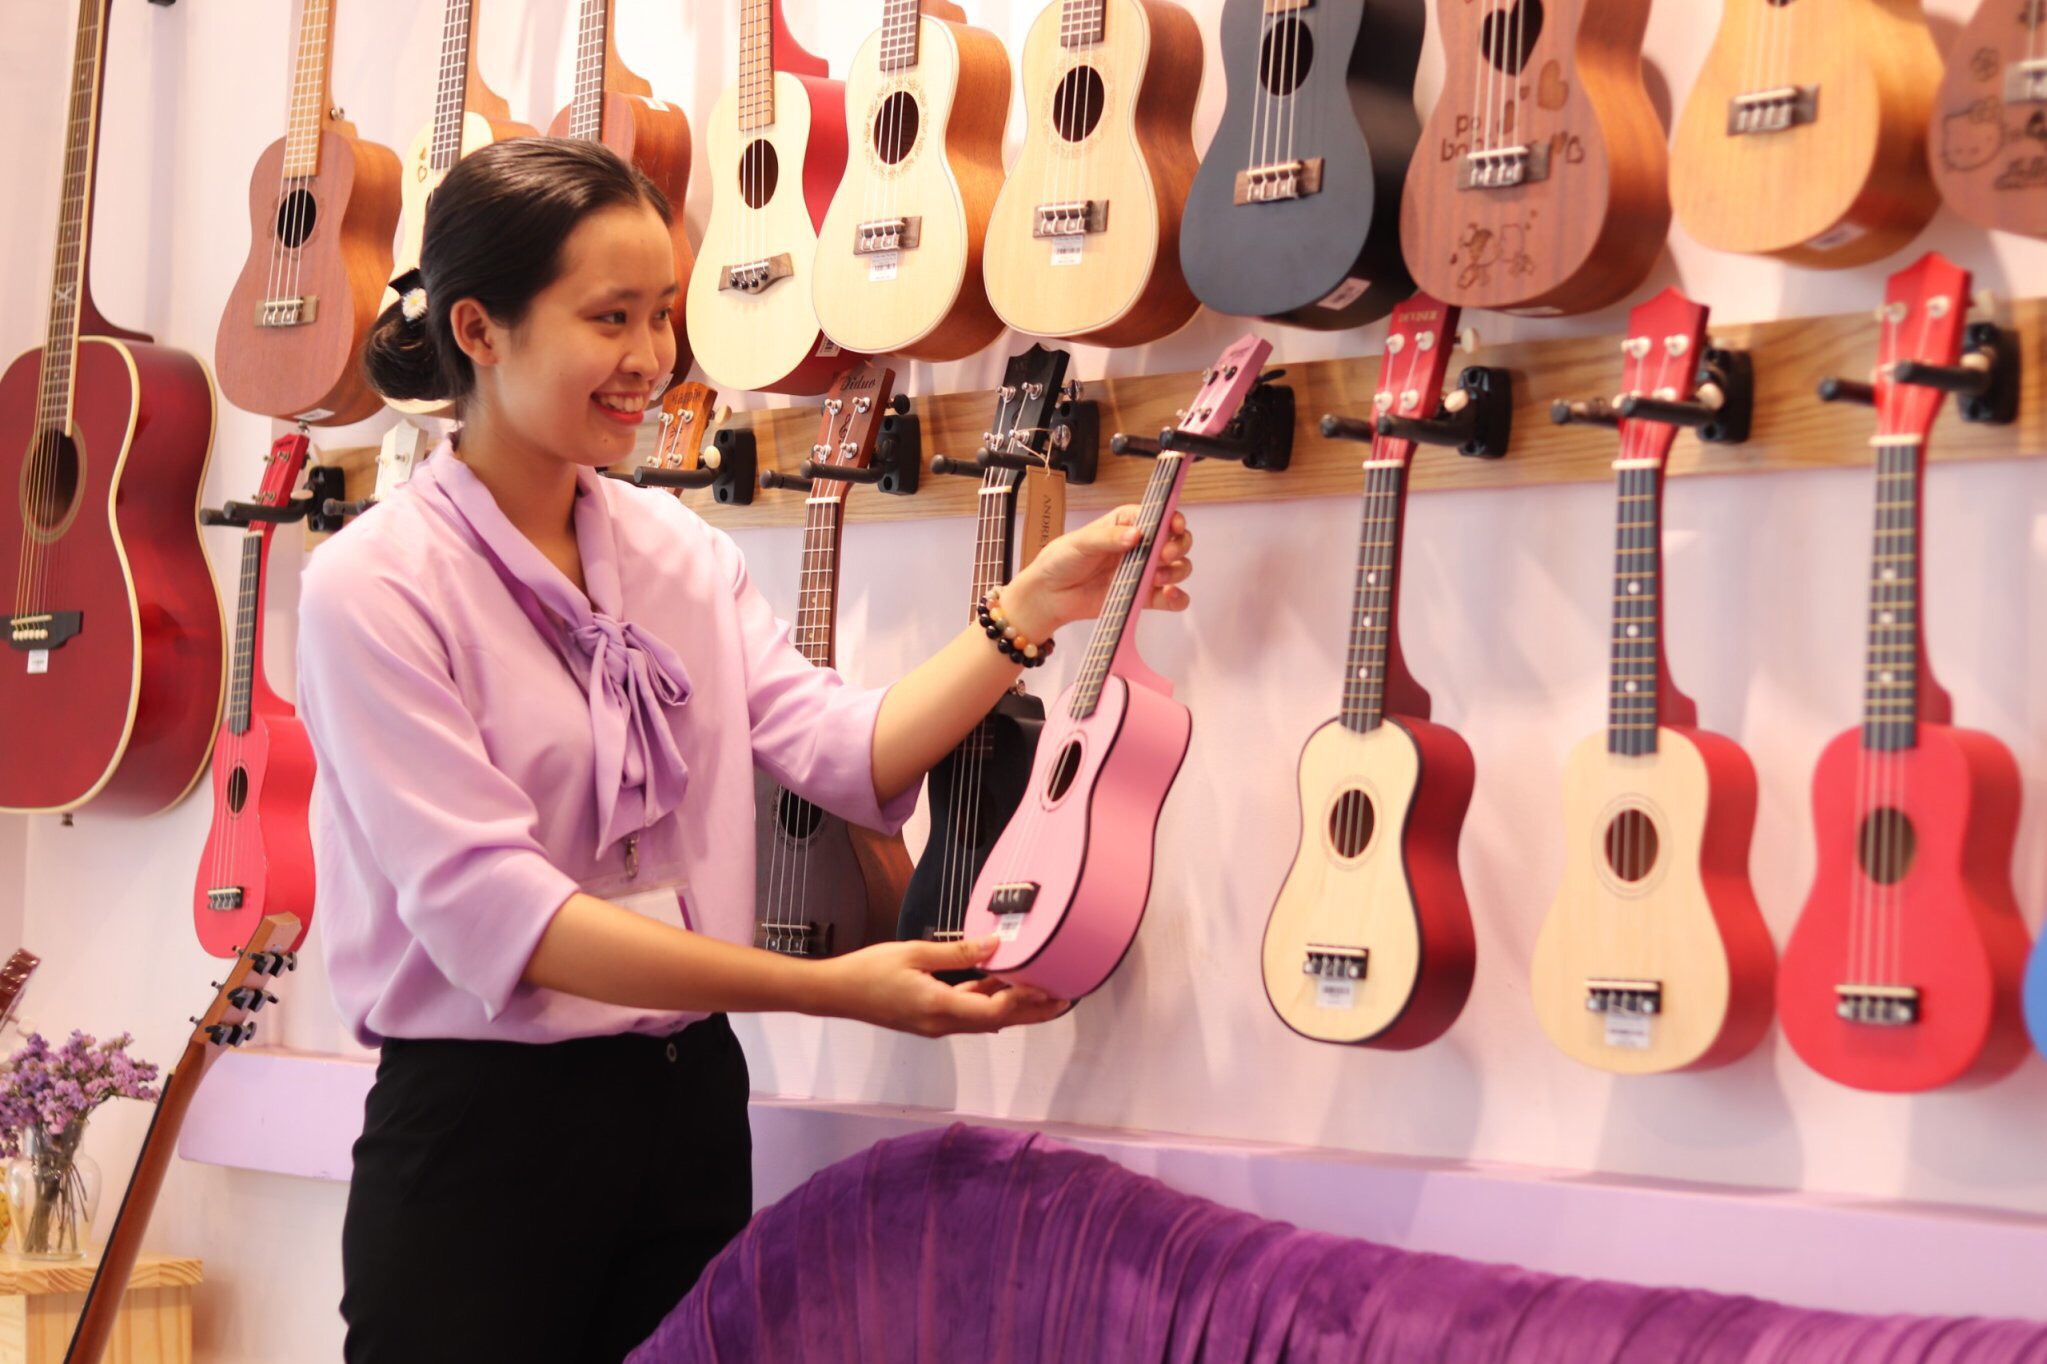 Mua đàn ukulele giá rẻ ở đâu